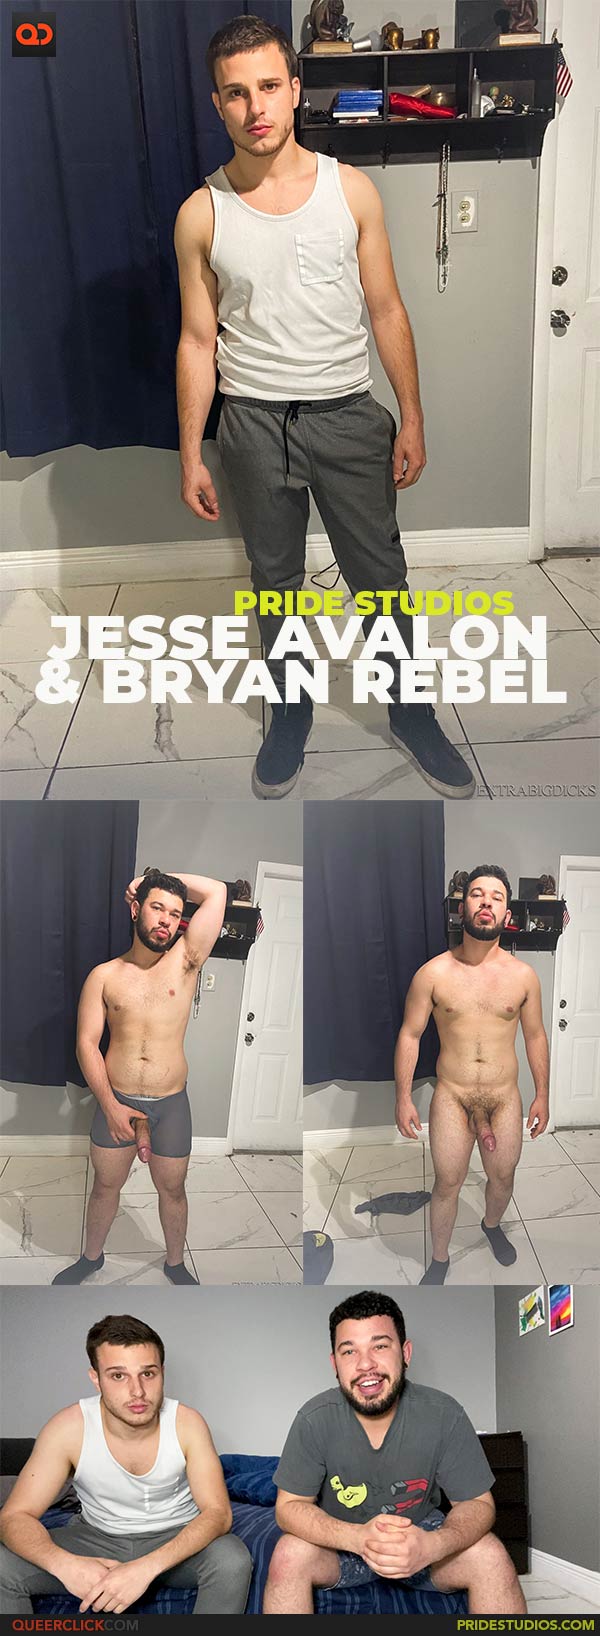 PrideStudios: Jesse Avalon and Bryan Rebel